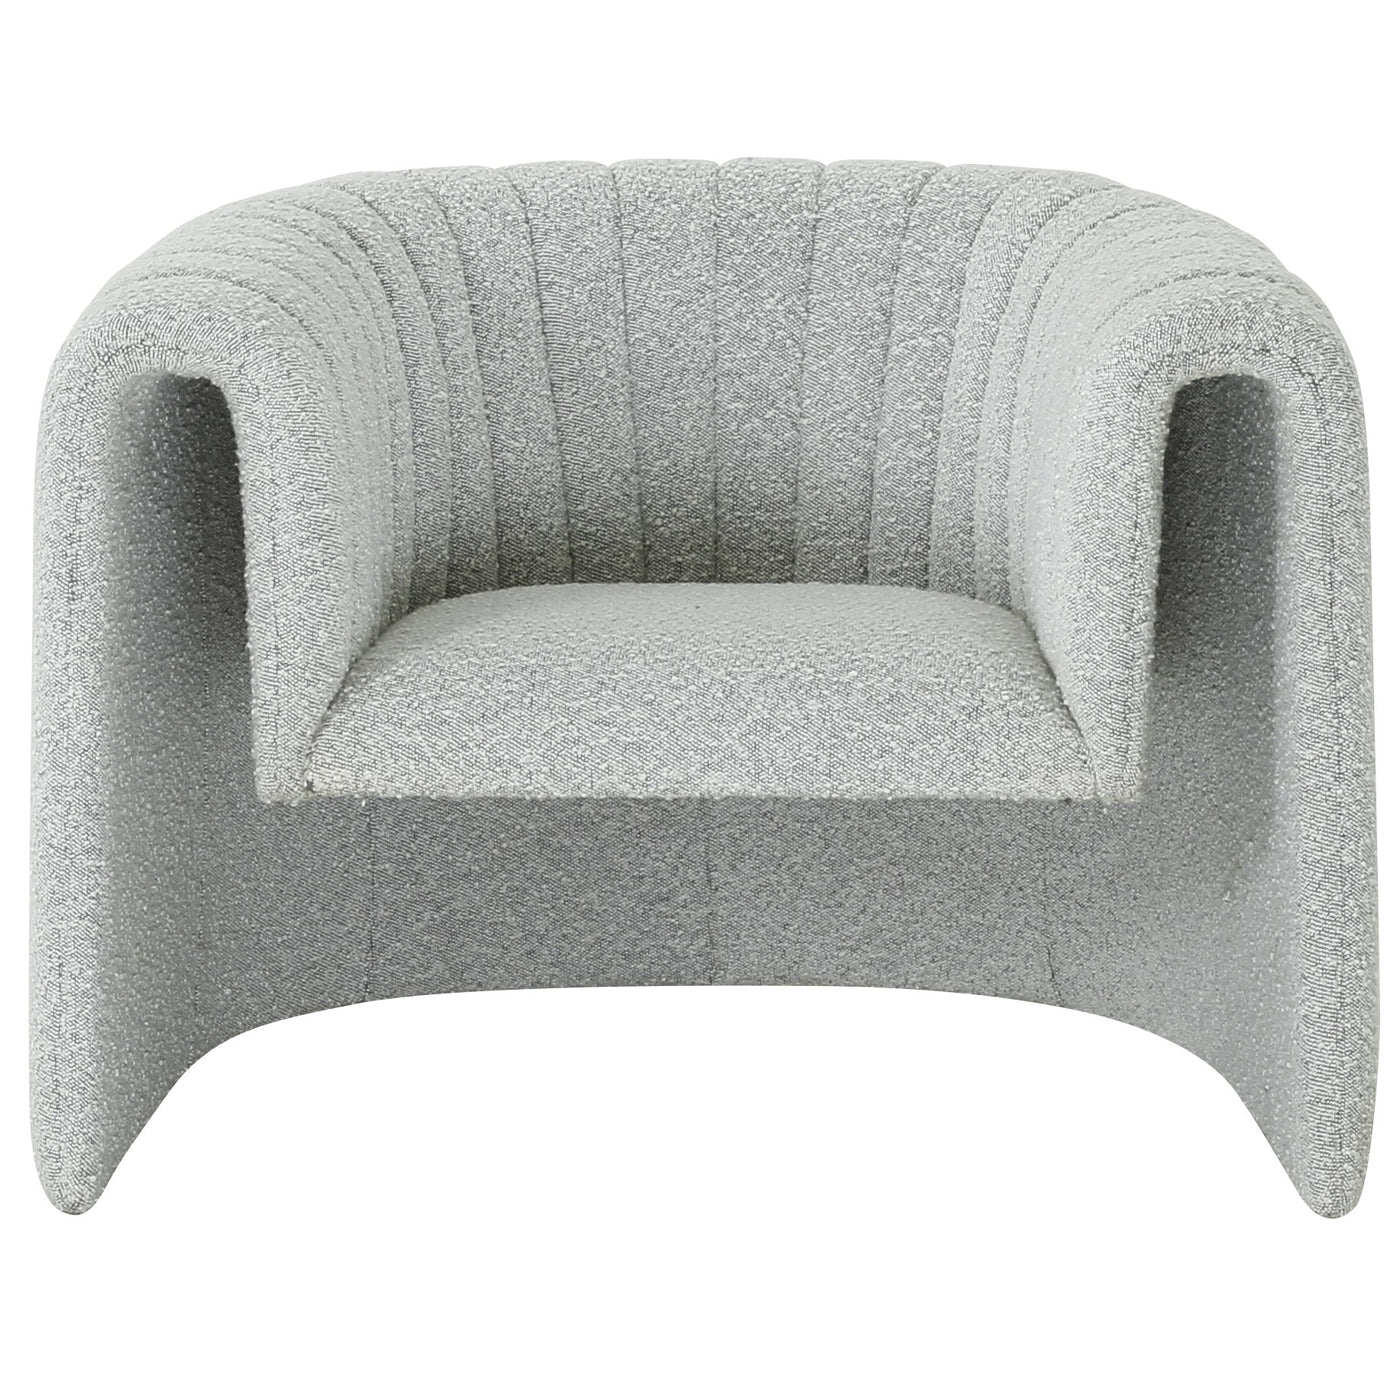 Orbit Chair - Future Classics Furniture